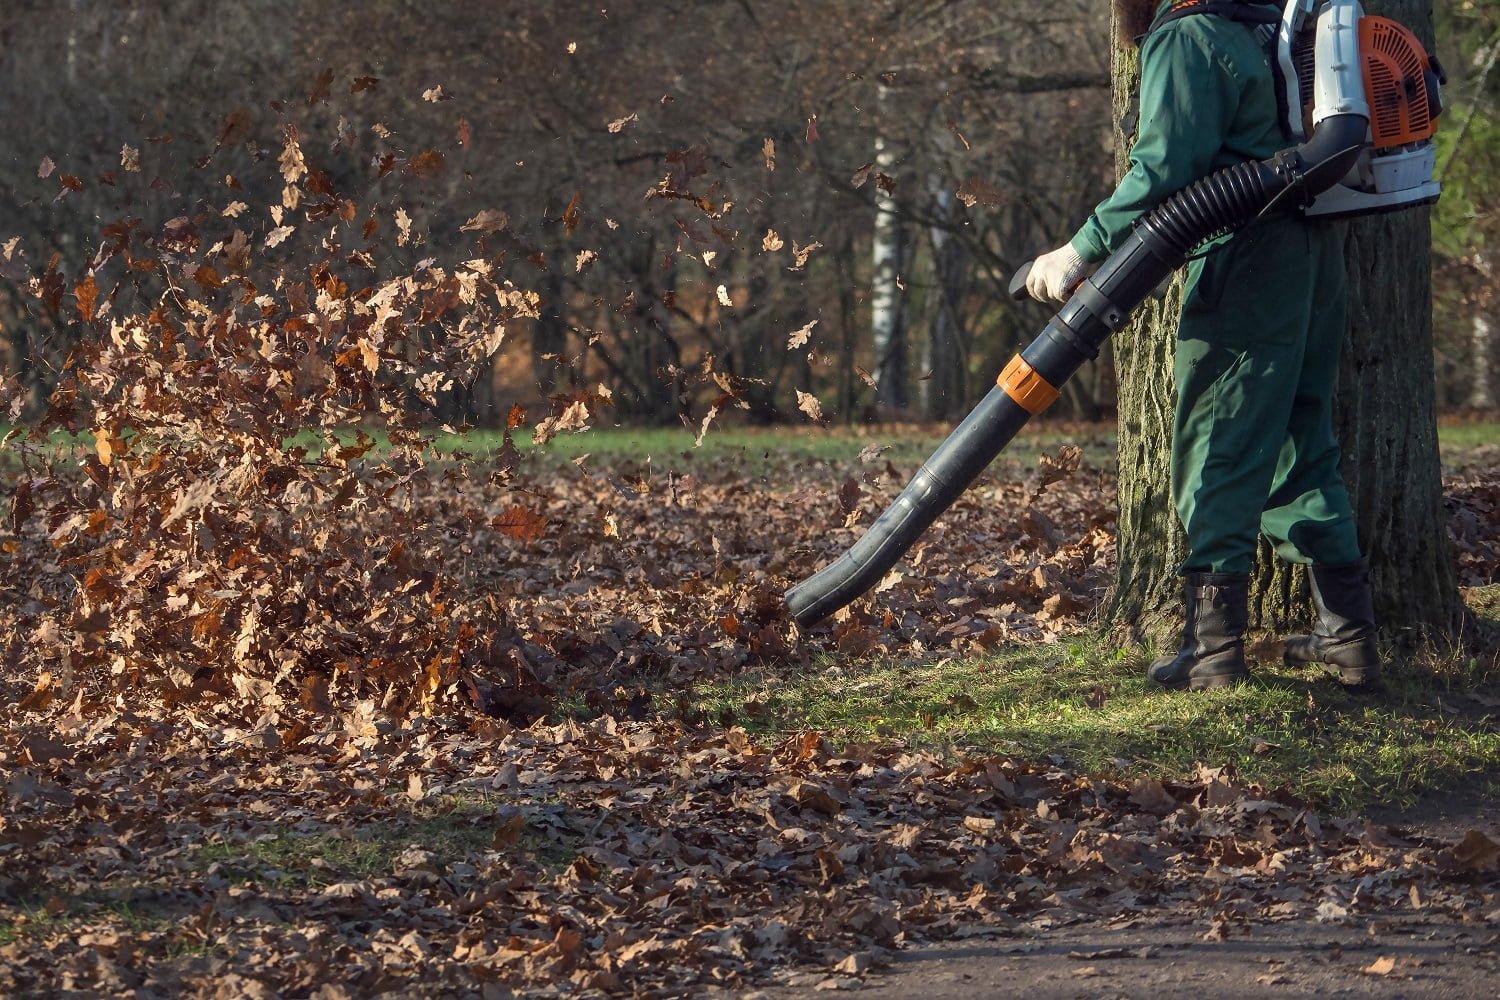 Male worker removes leaf blower lawn of autumn garden.